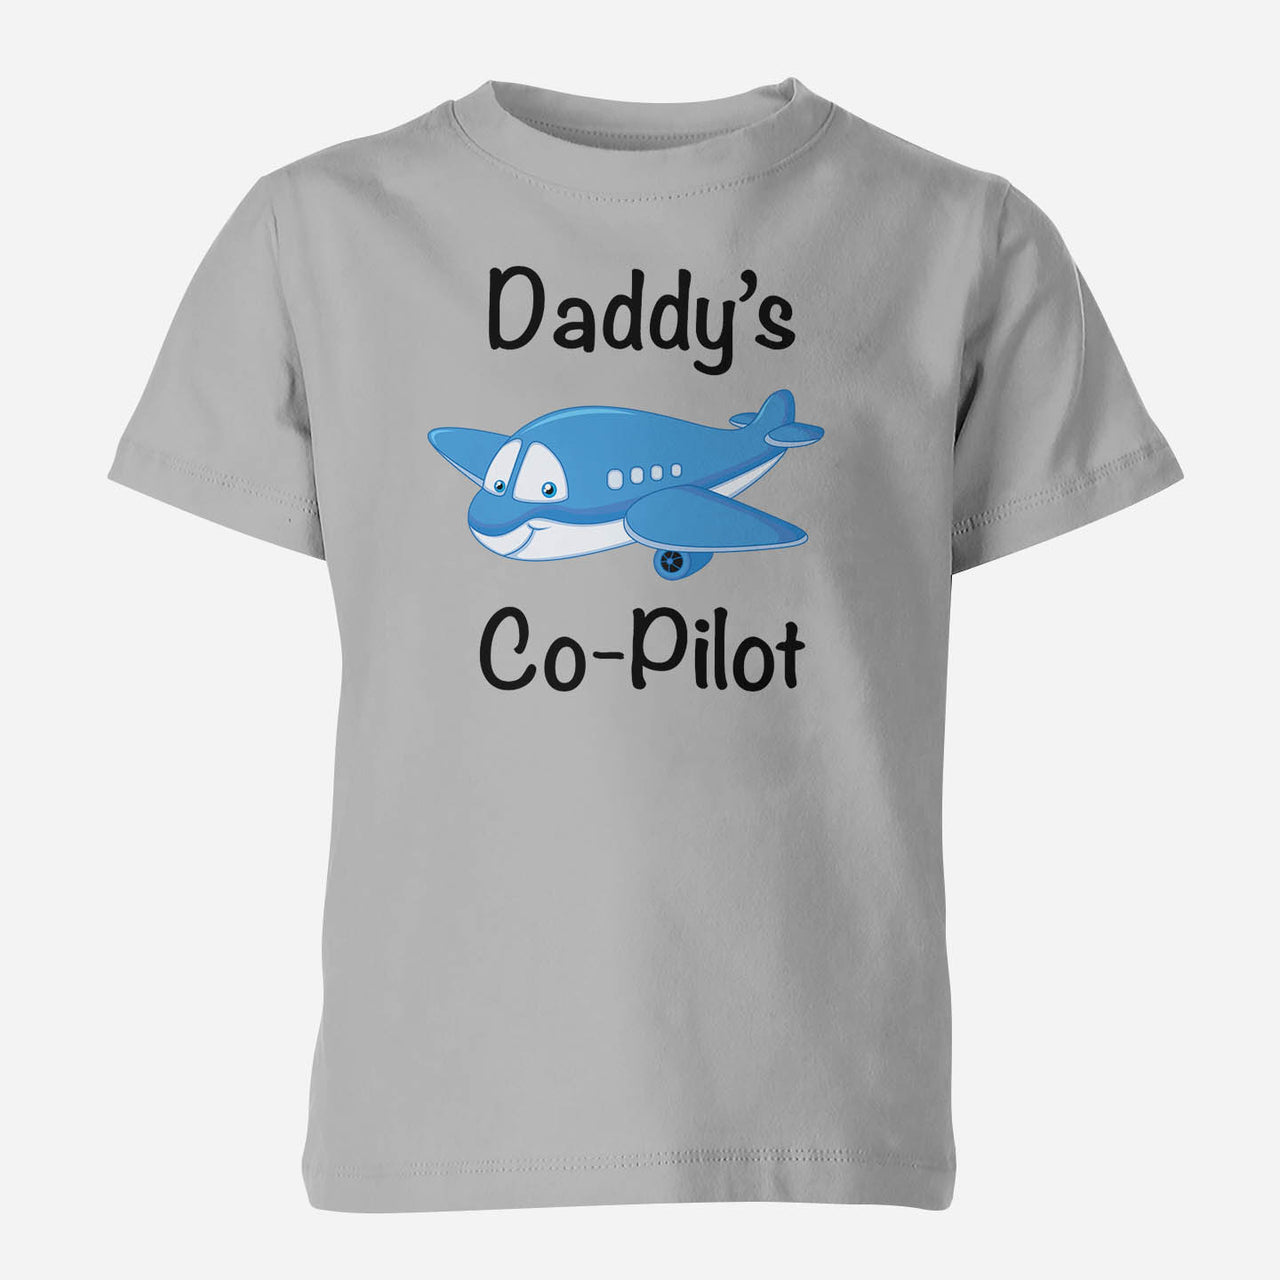 Daddy's Co-Pilot (Jet Airplane) Designed Children T-Shirts